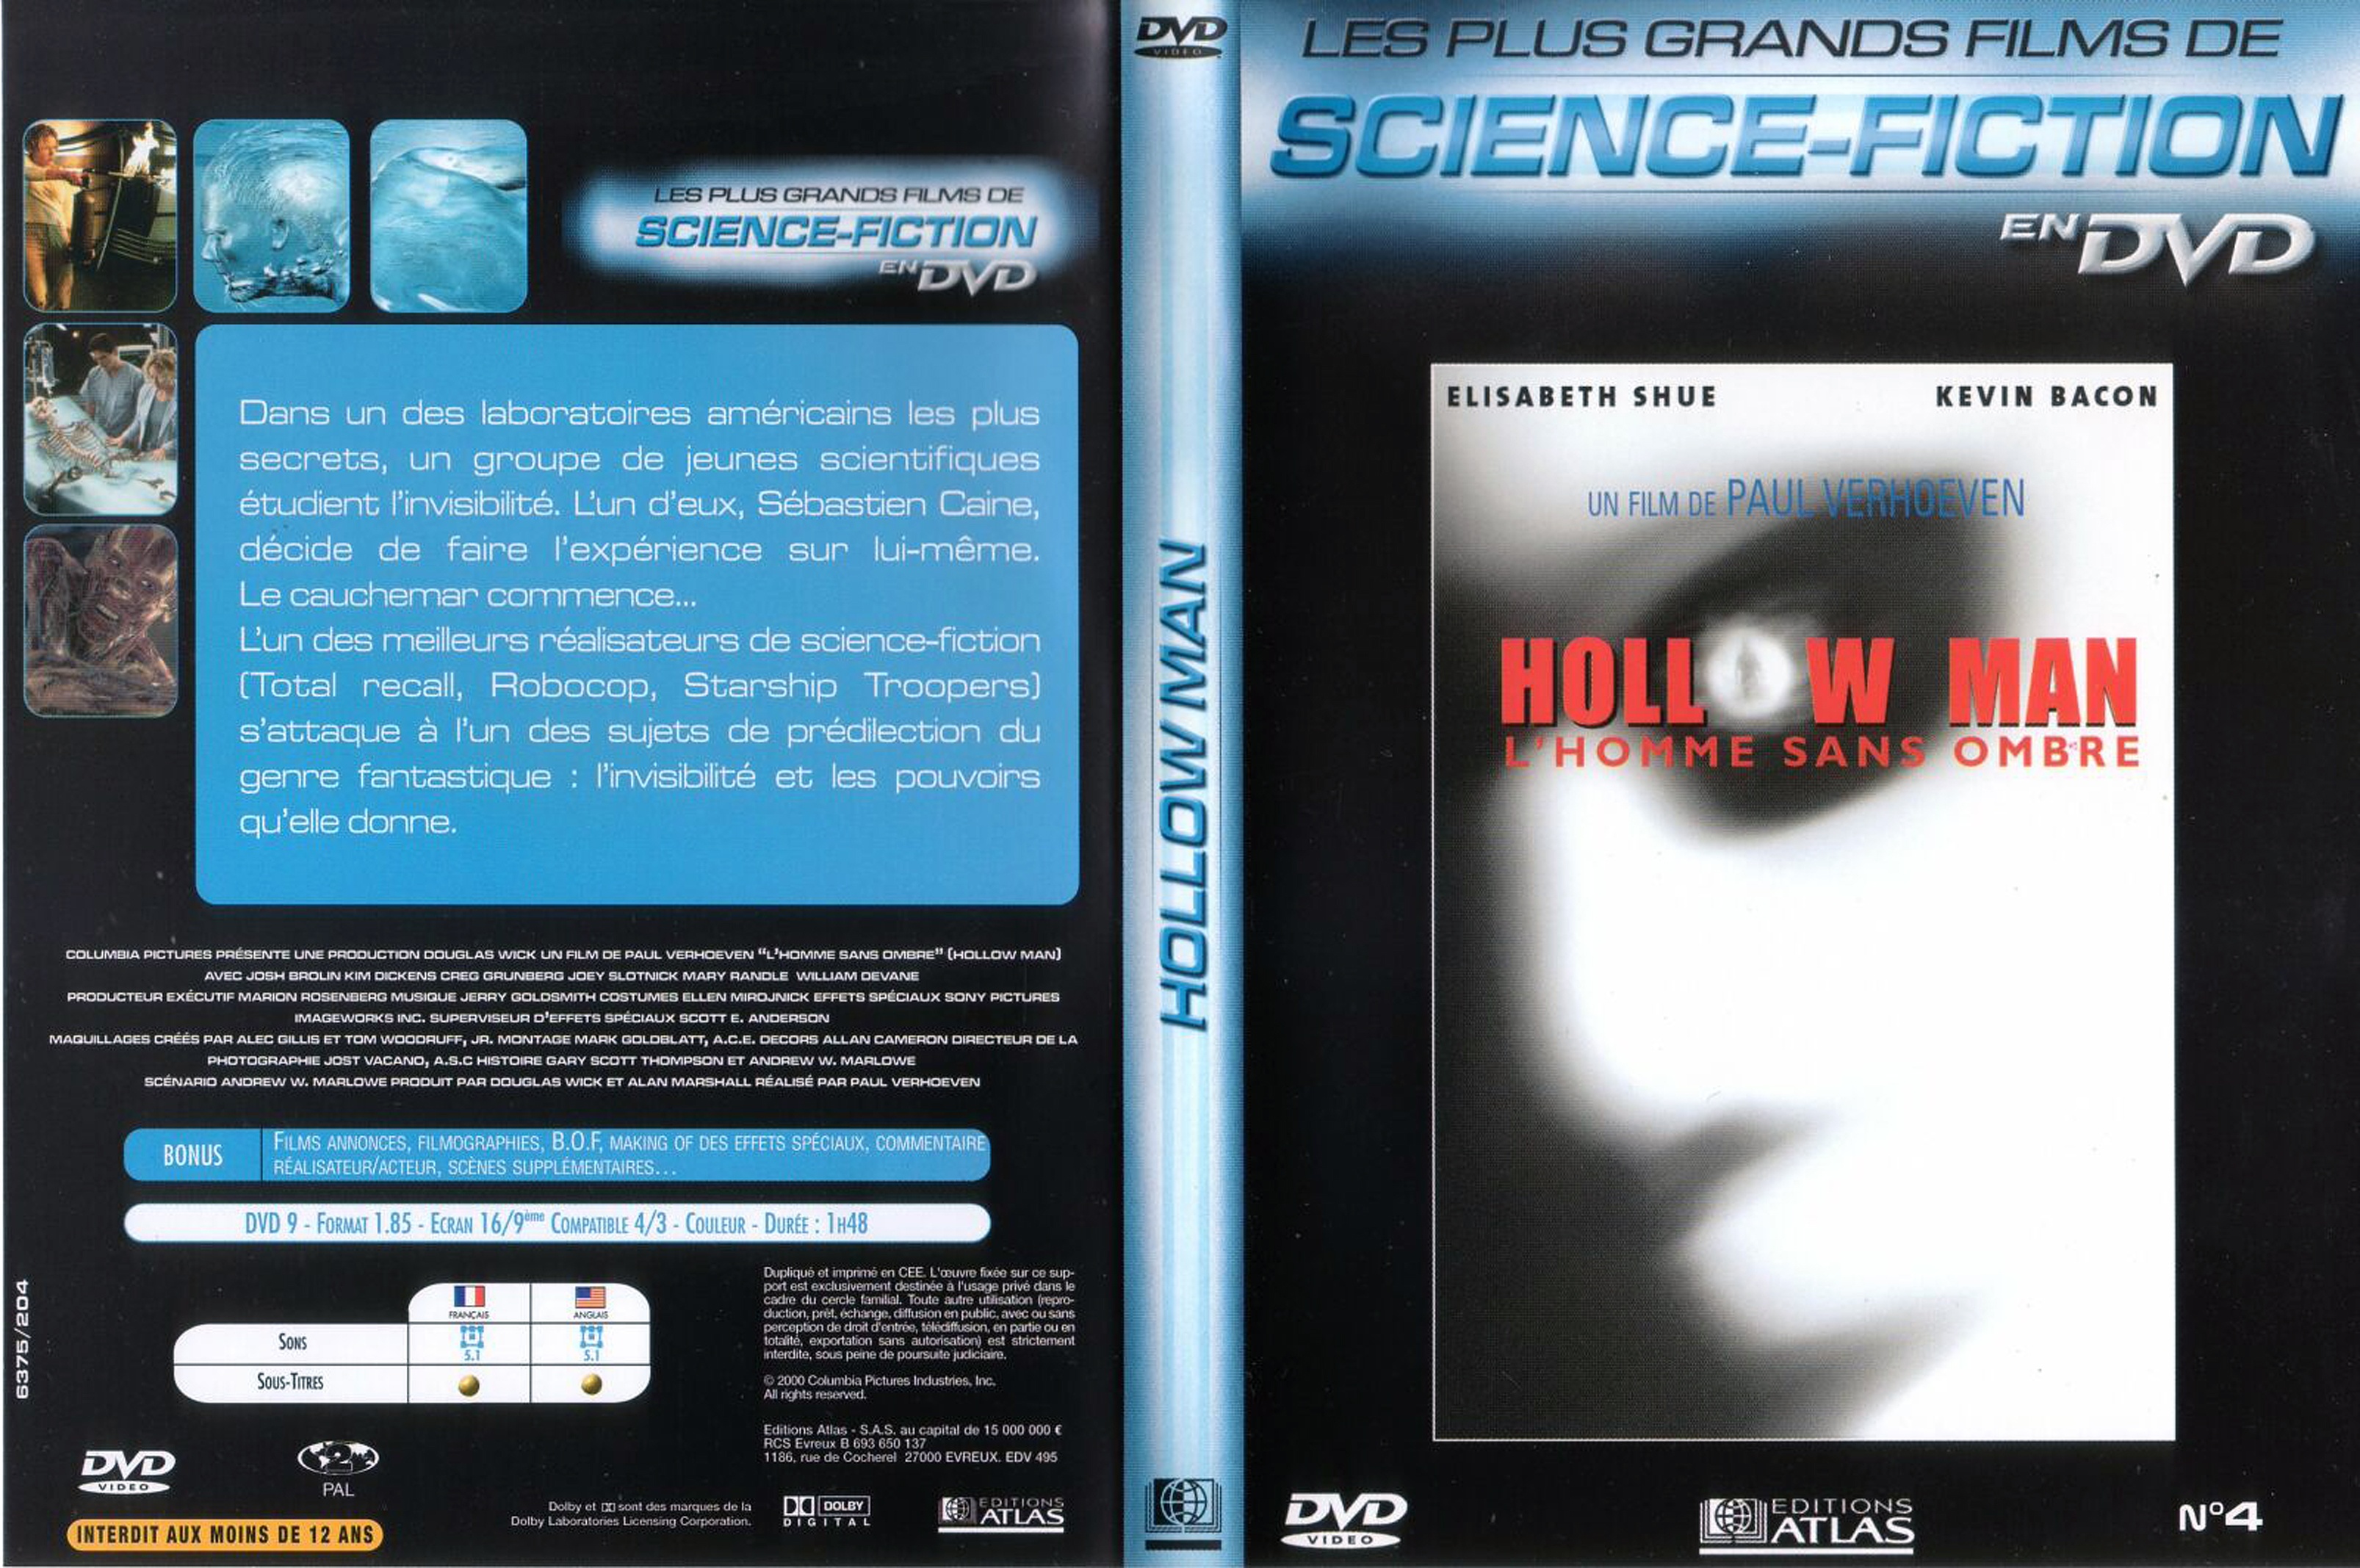 Jaquette DVD Hollow man v2